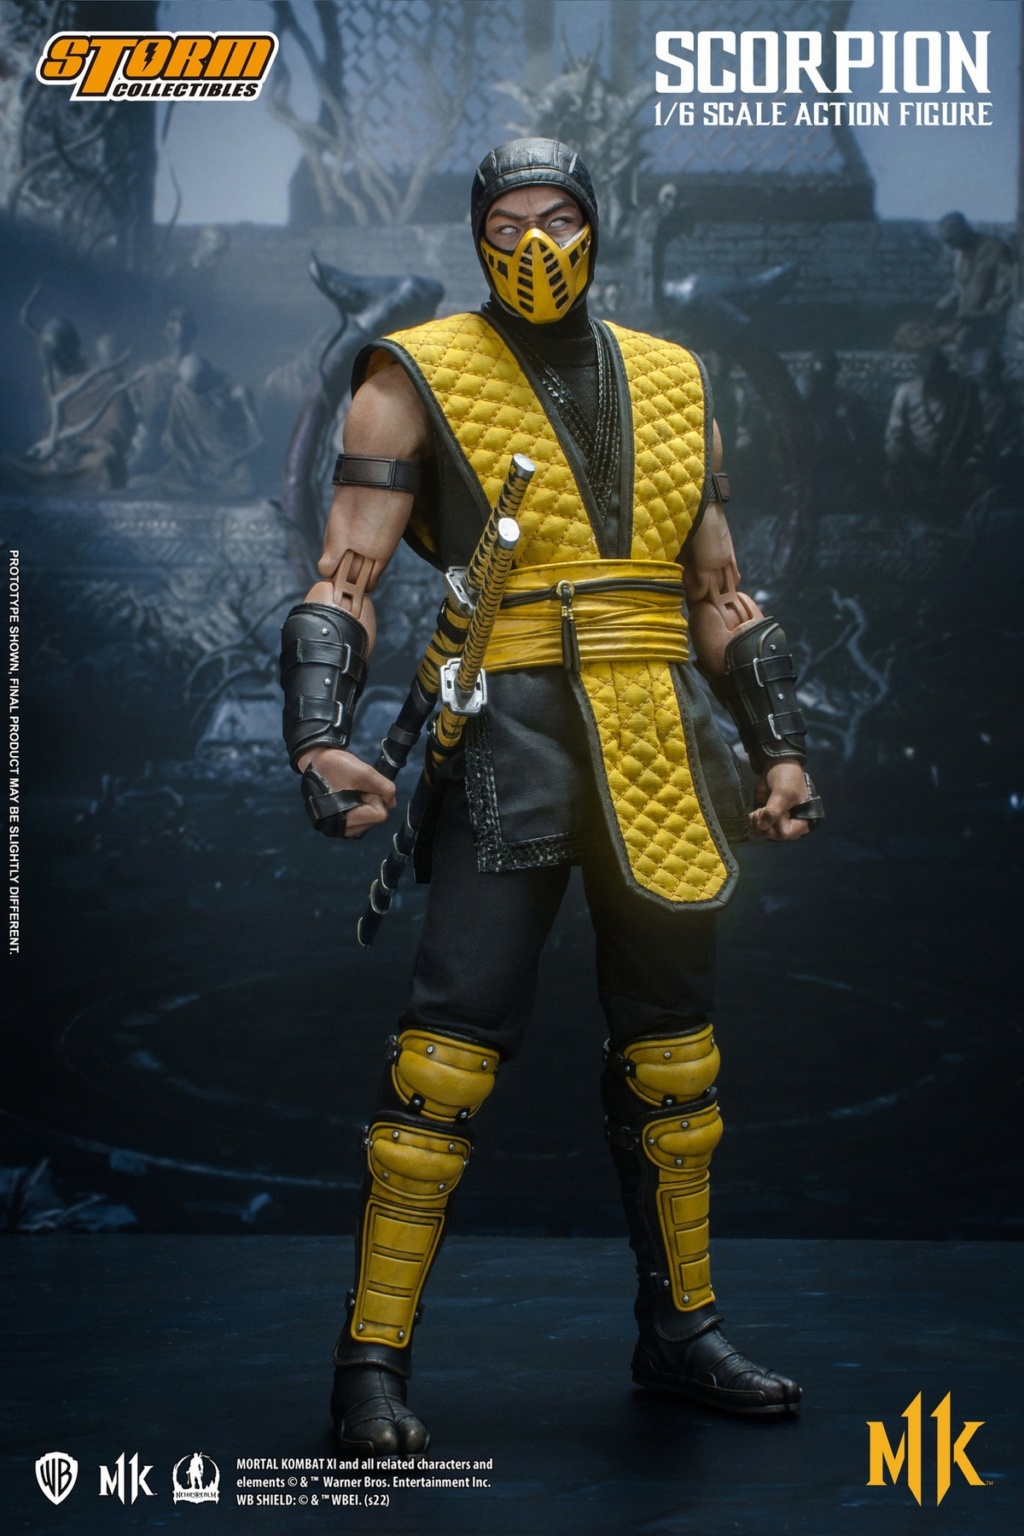 Scorpion - NEW PRODUCT: Storm Toys: 1/6 "Mortal Kombat" Series - Scorpion/Scorpion Action Figure 1eadc710